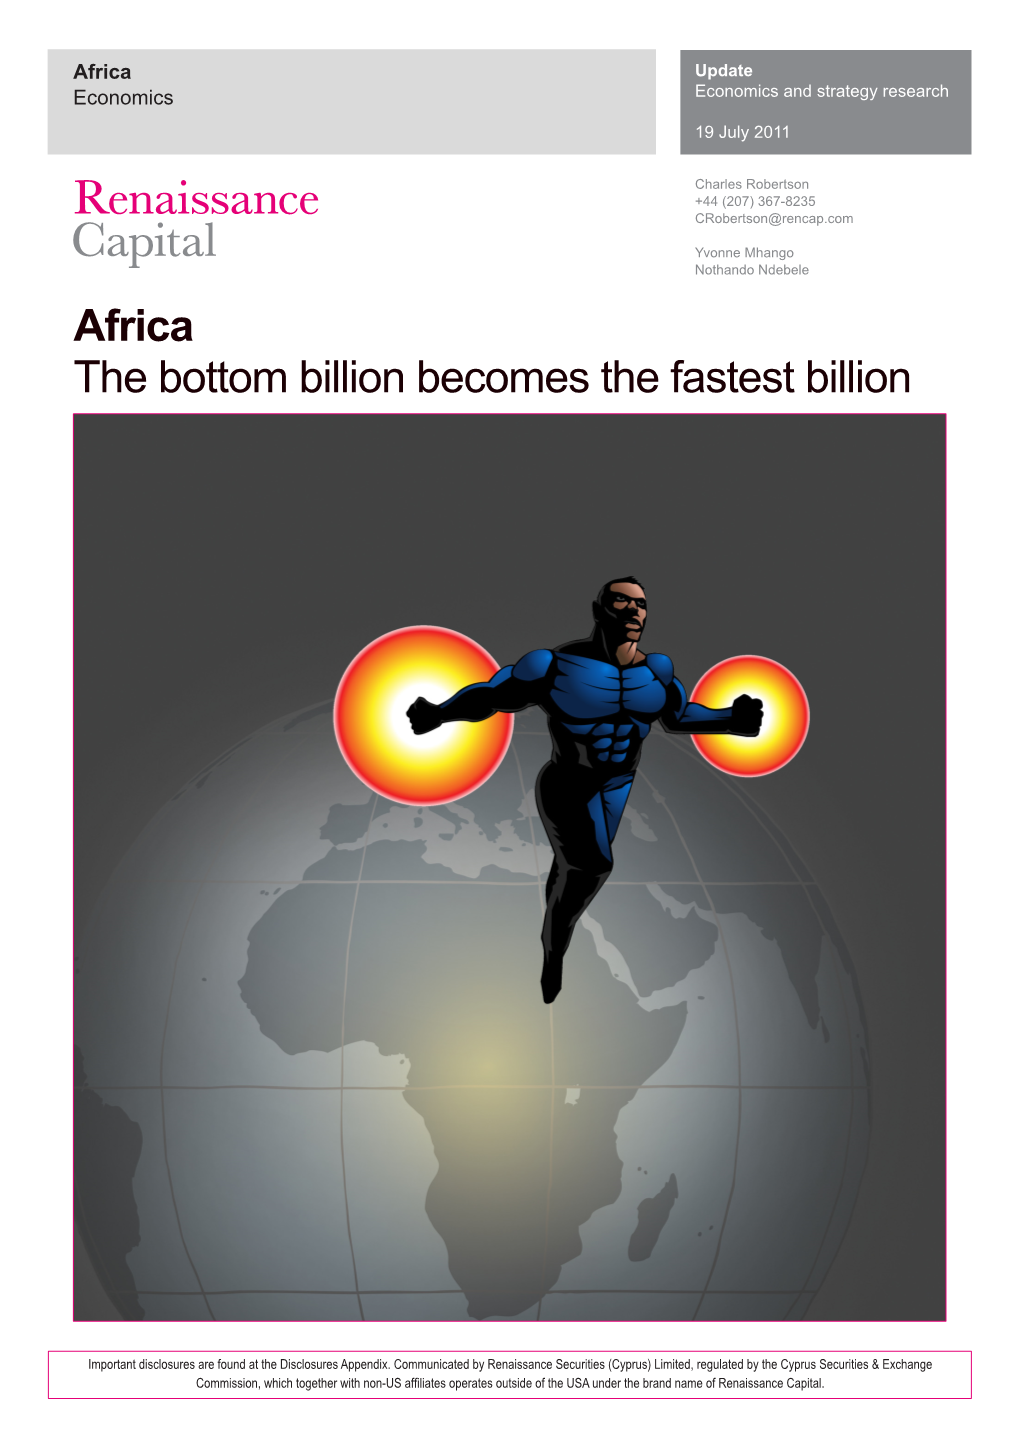 Africa the Bottom Billion Becomes the Fastest Billion